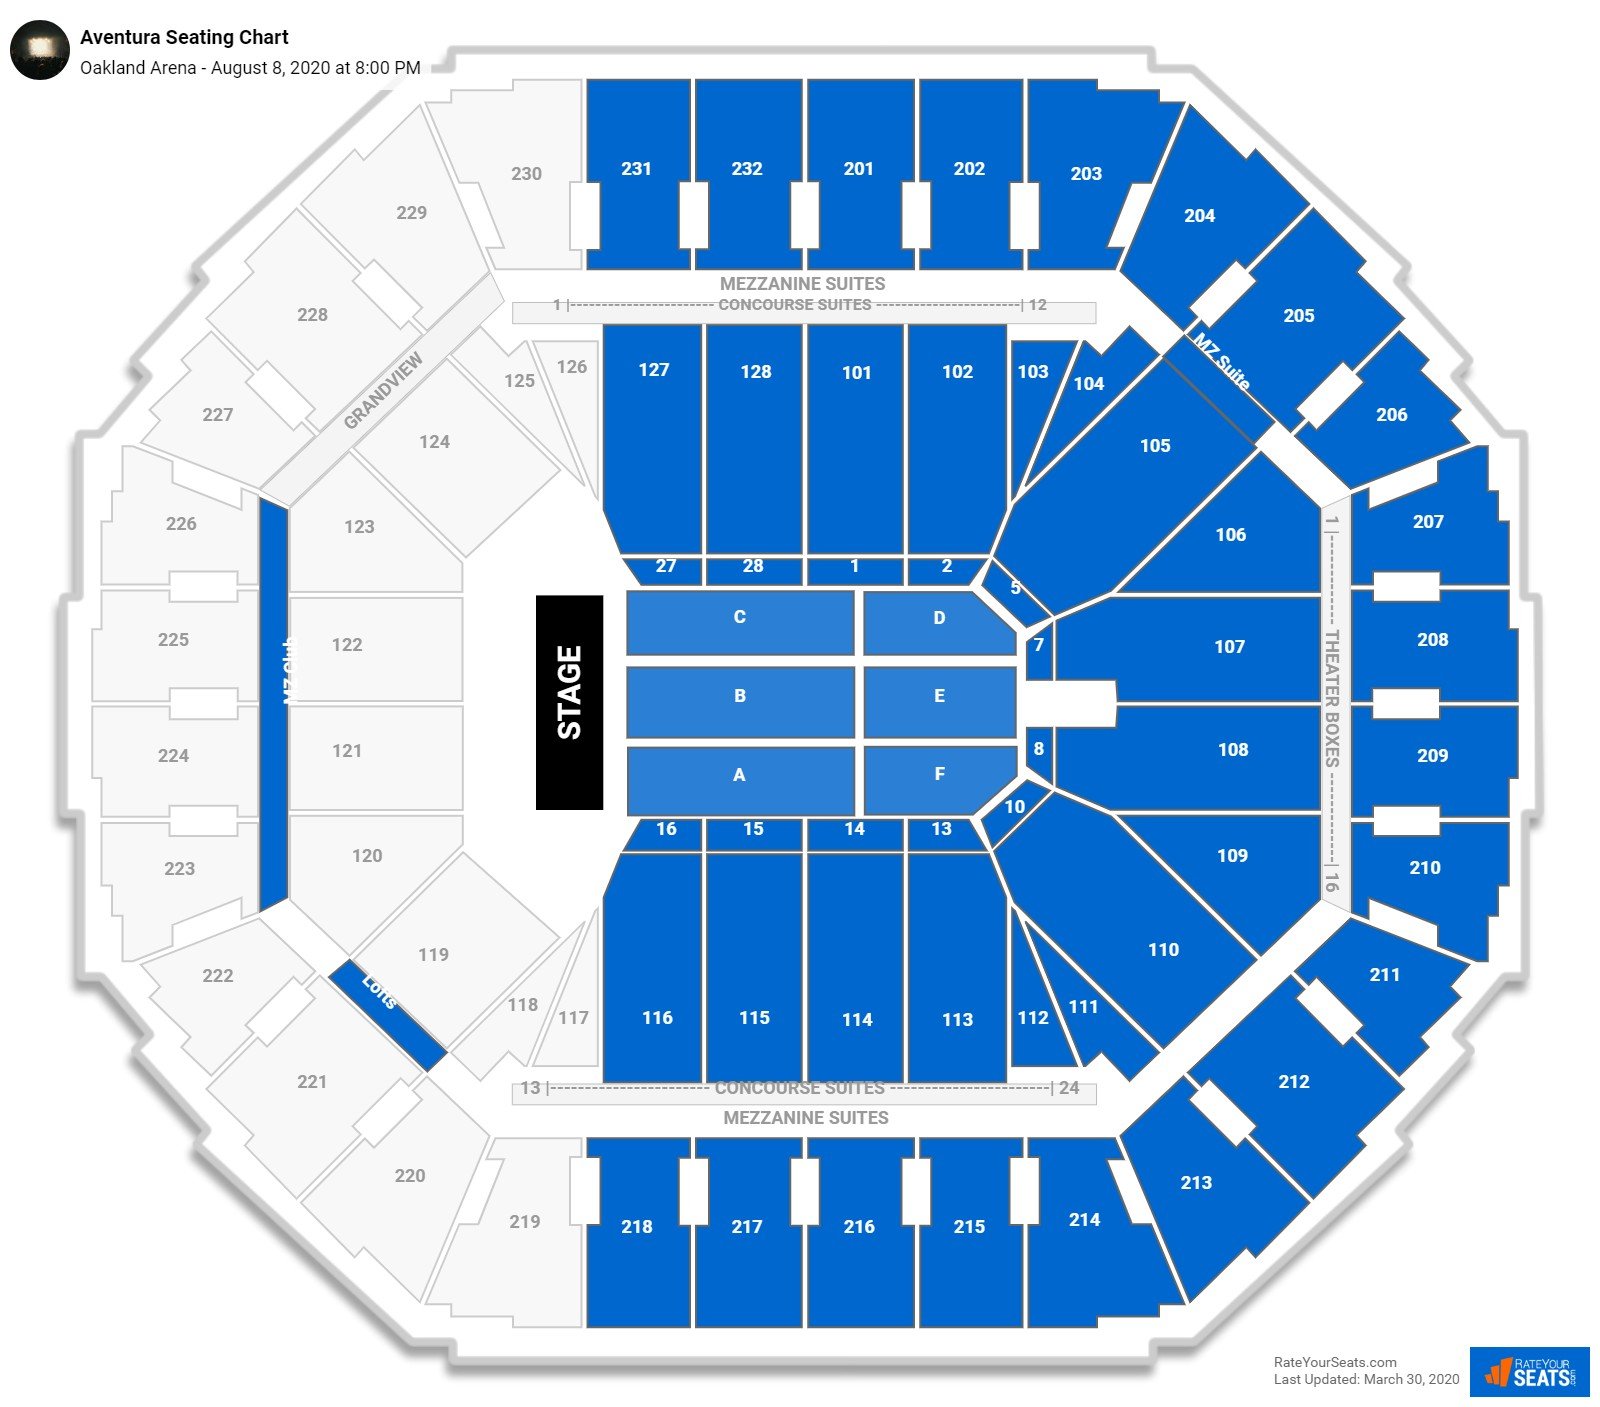 Oakland Coliseum Concert Seating Chart